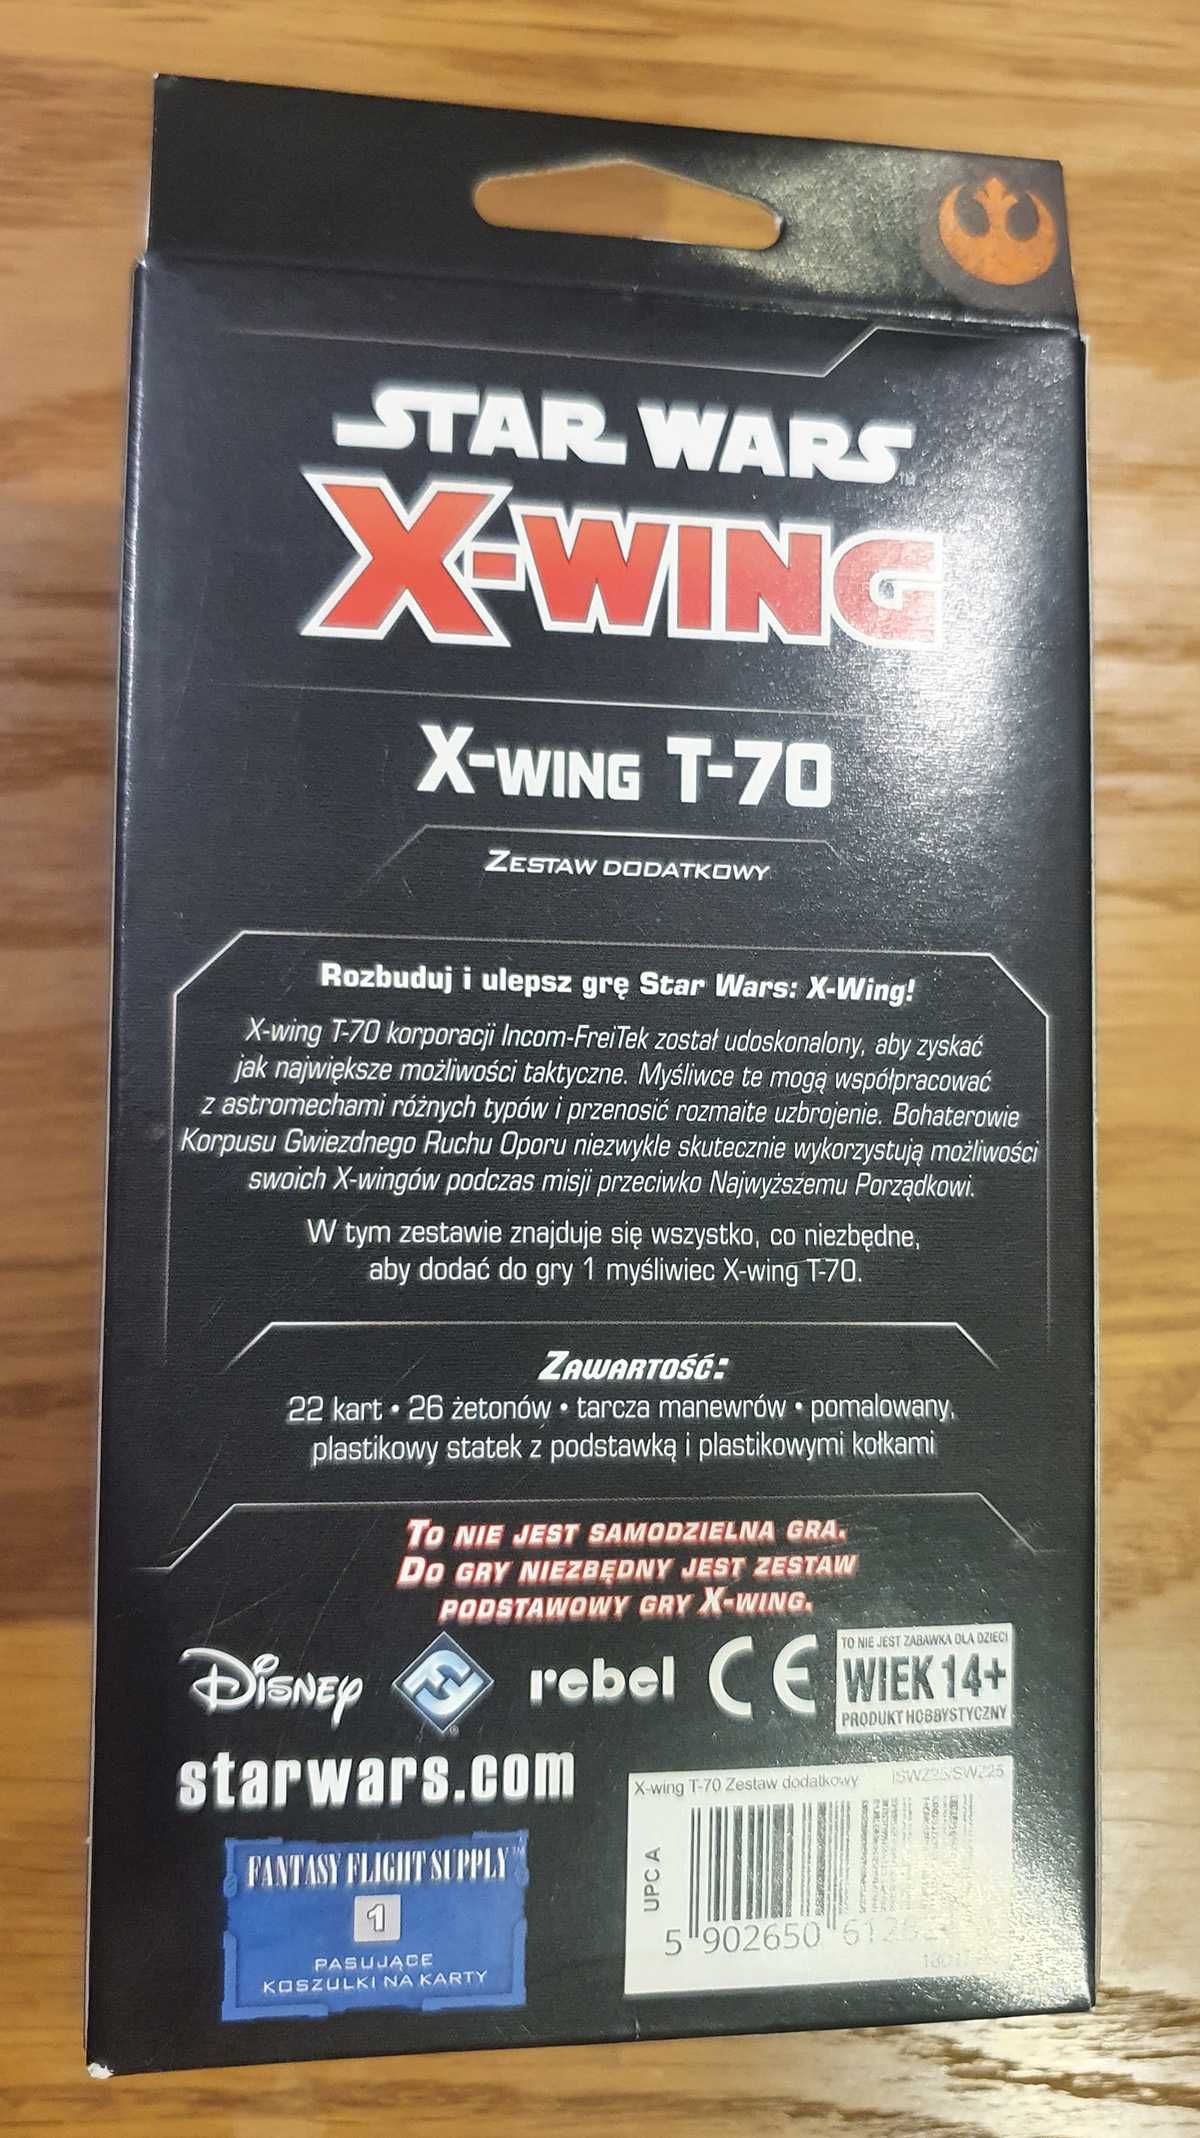 Star Wars: X-Wing - X-wing T-70 (druga edycja) Rebel